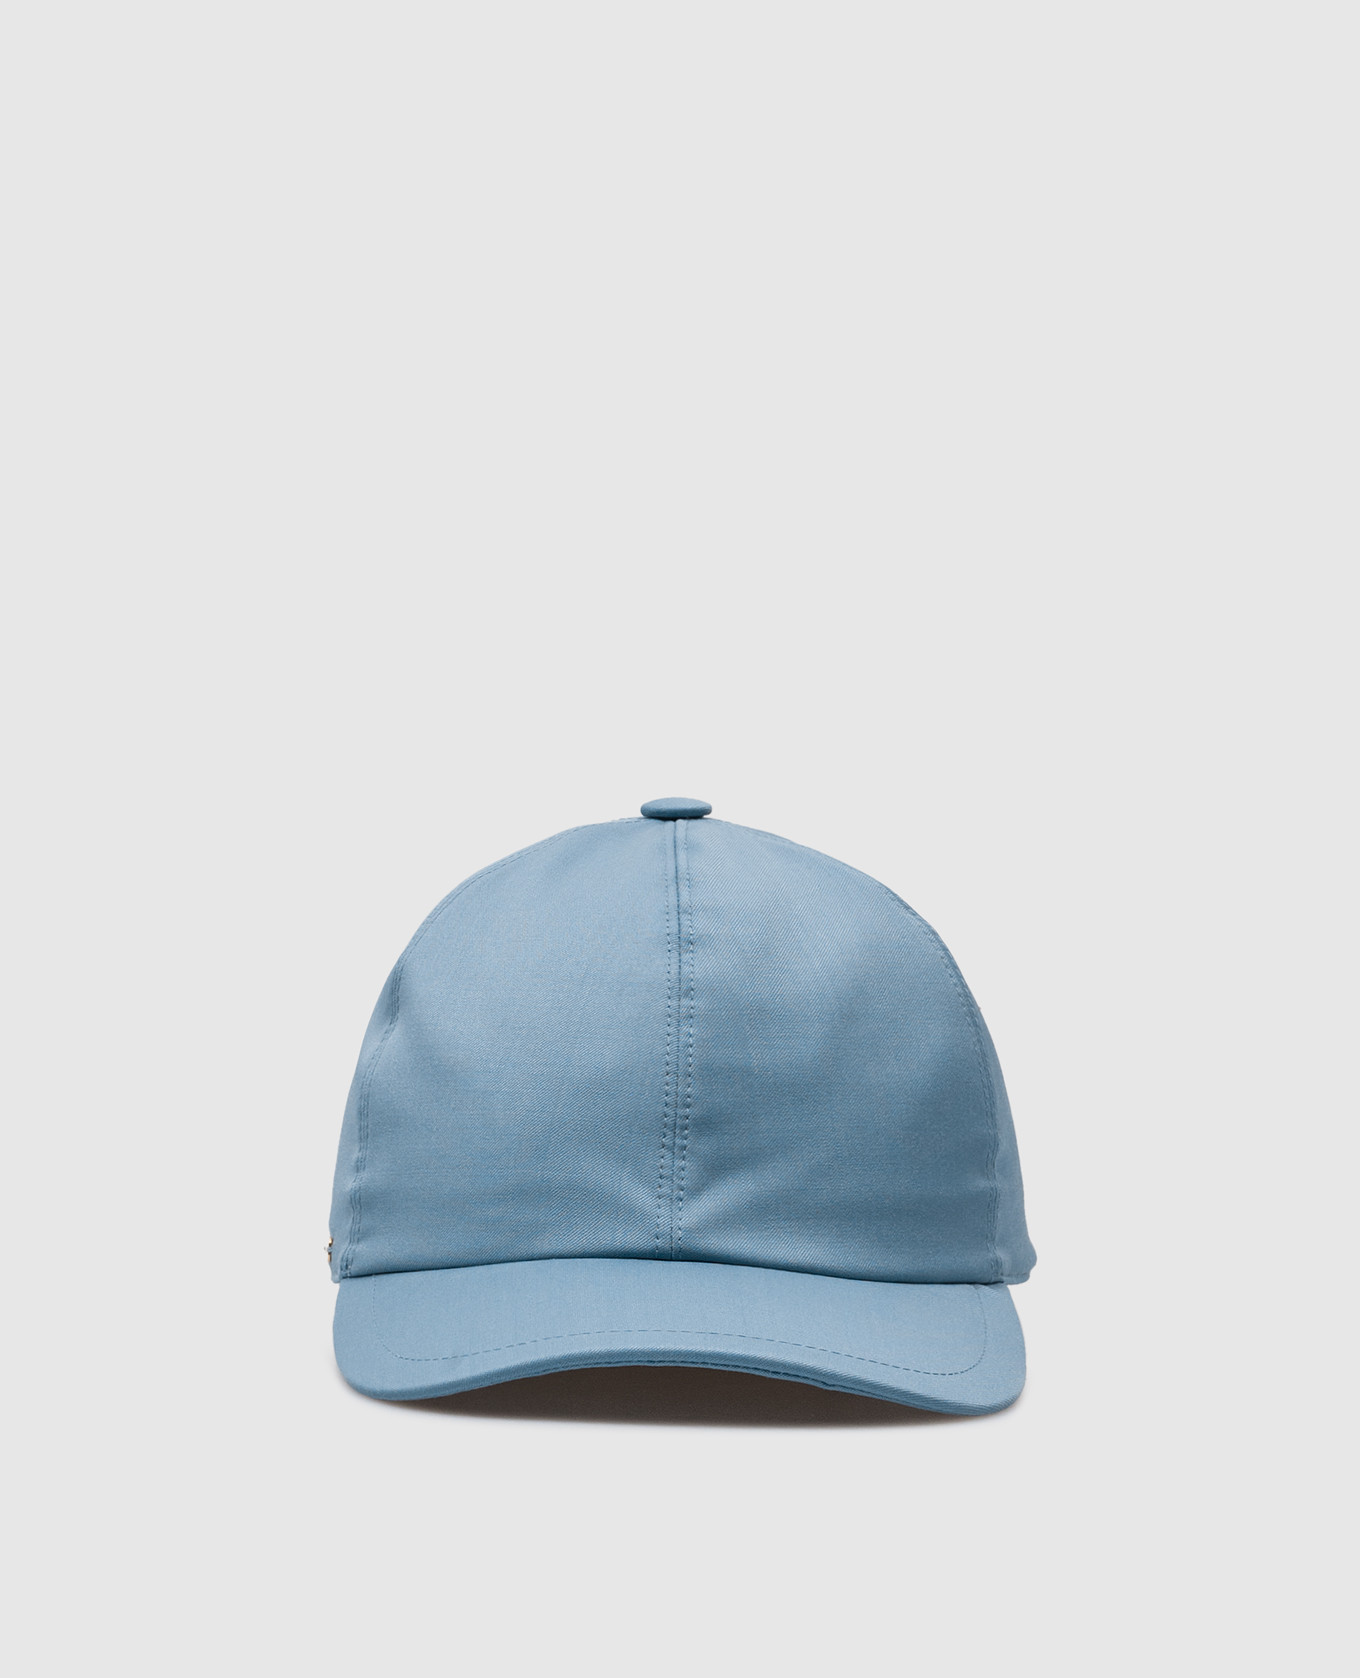 Blue wool cap with metal logo